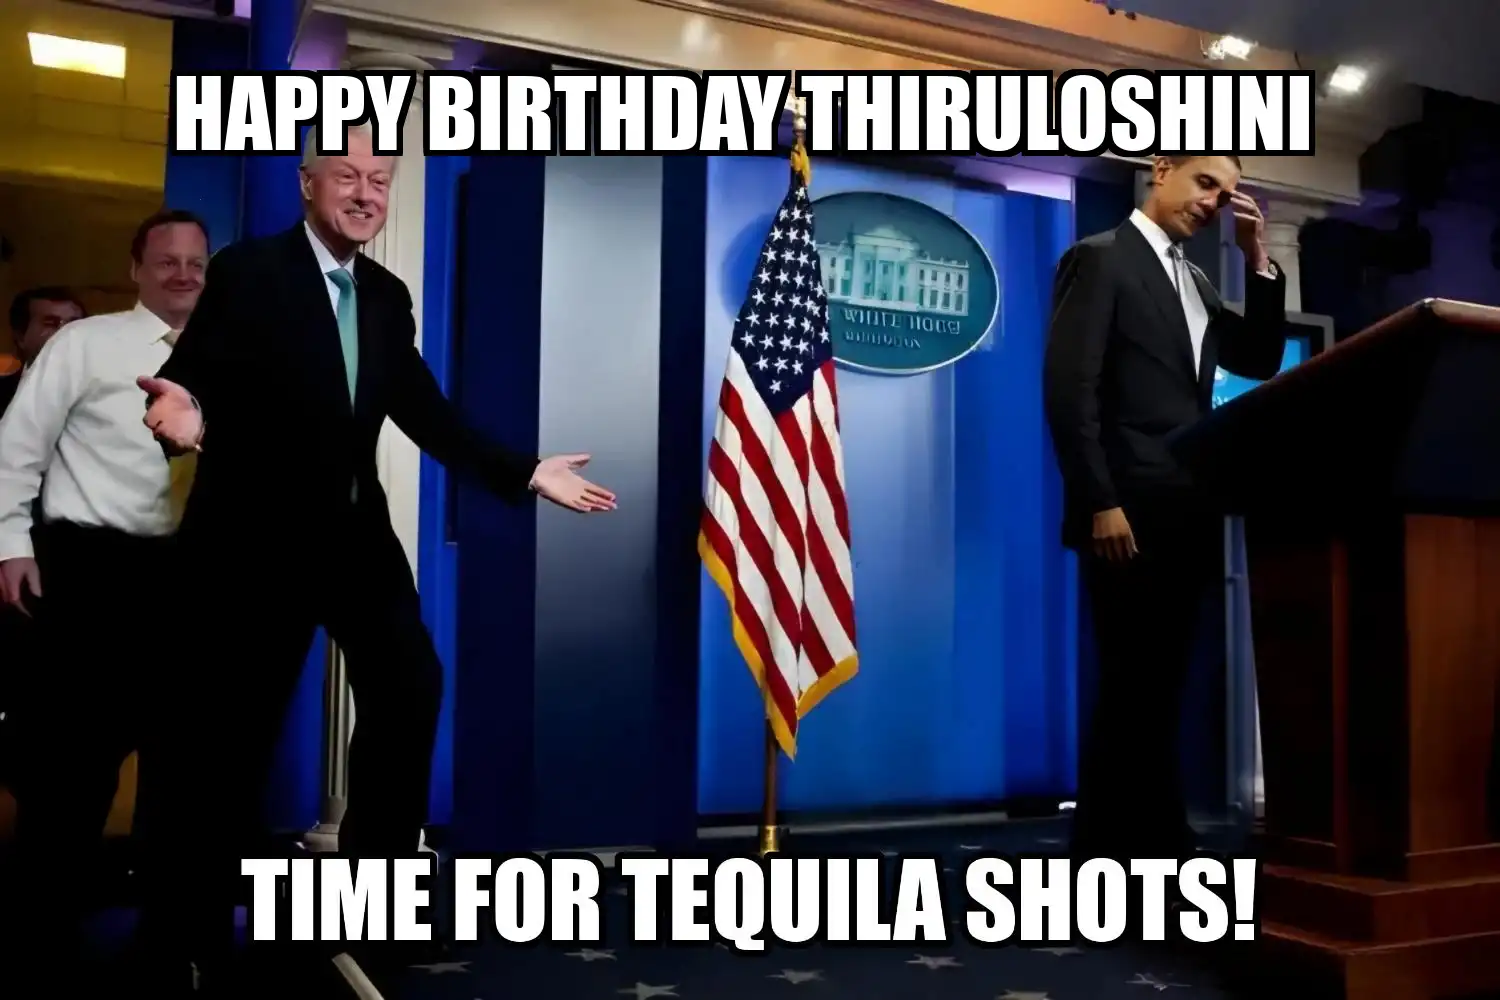 Happy Birthday Thiruloshini Time For Tequila Shots Memes